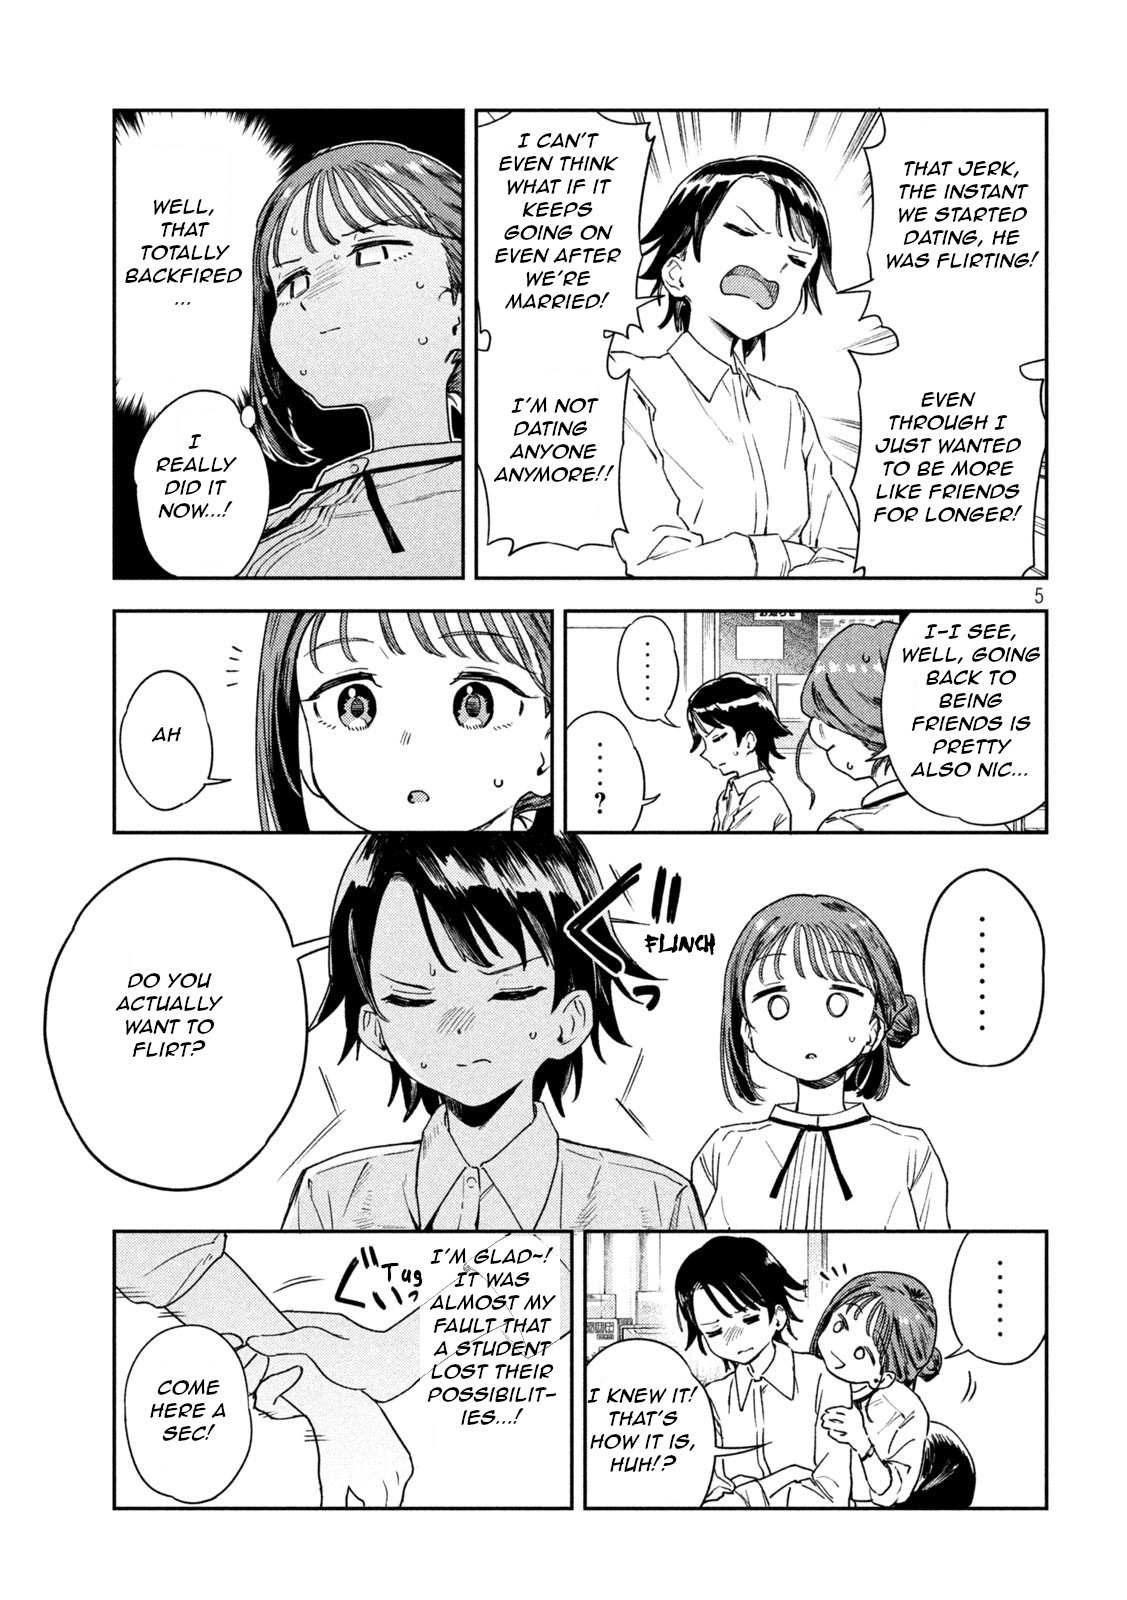 Miyo-Chan Sensei Said So - chapter 6 - #6